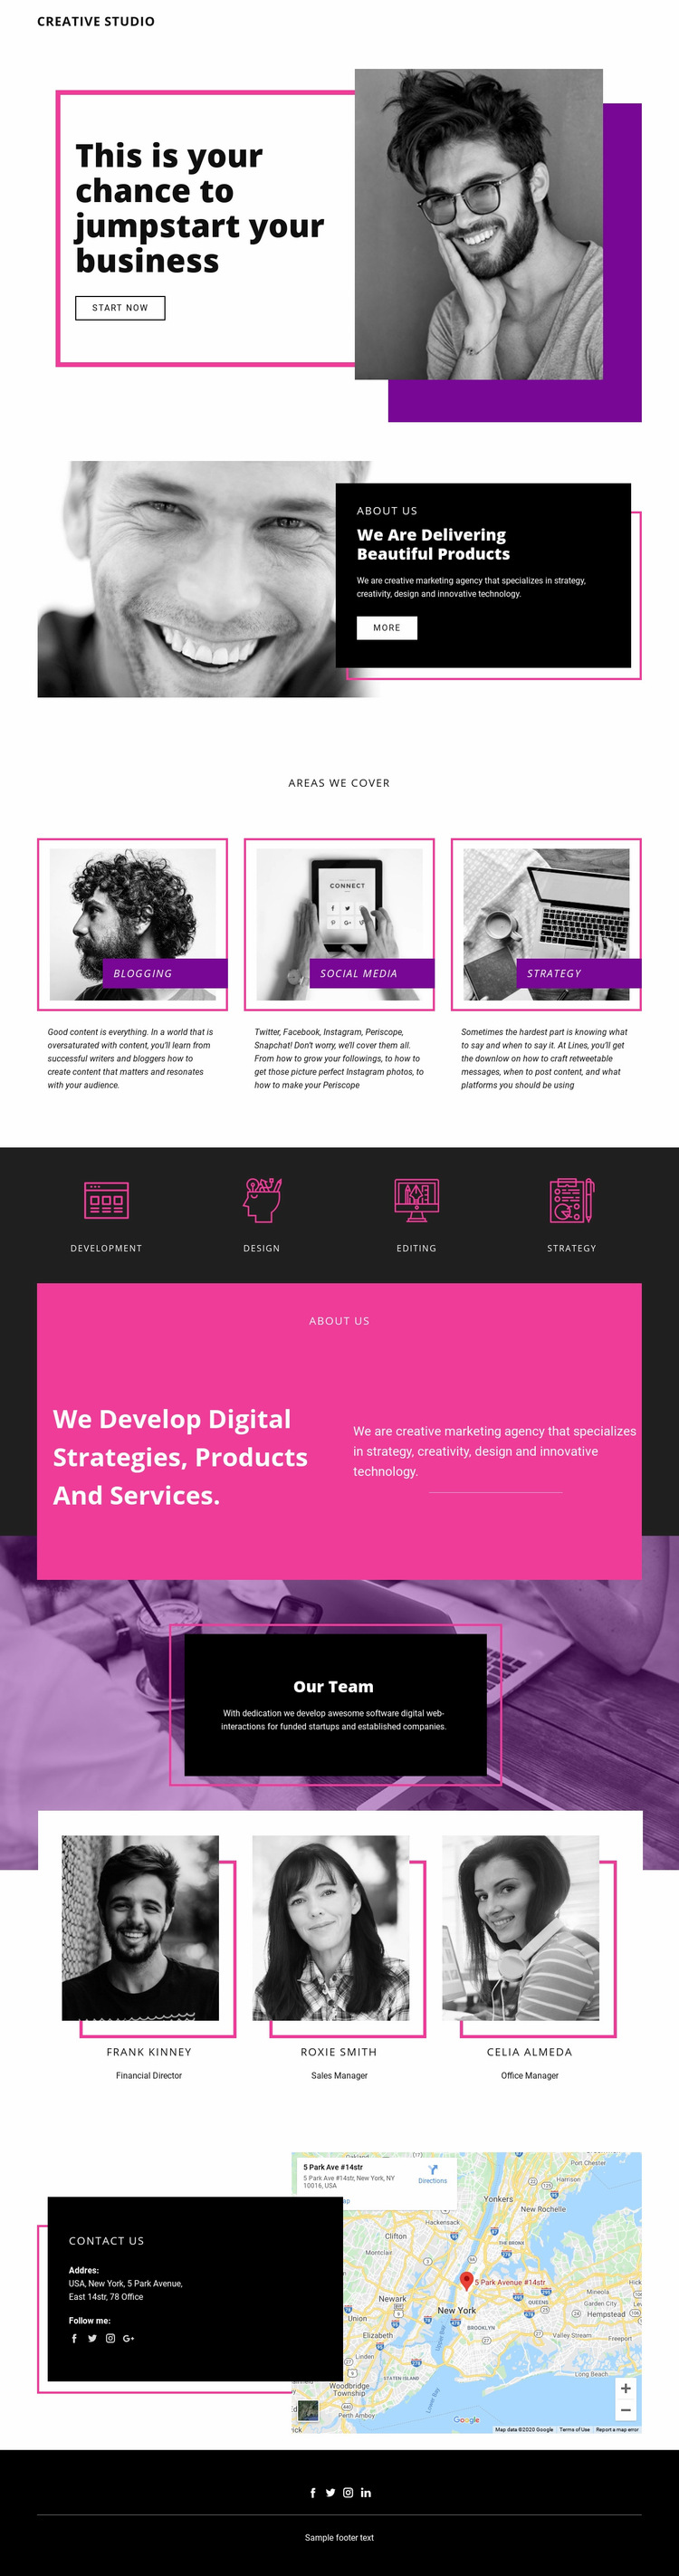 Digital Studio Web Page Design